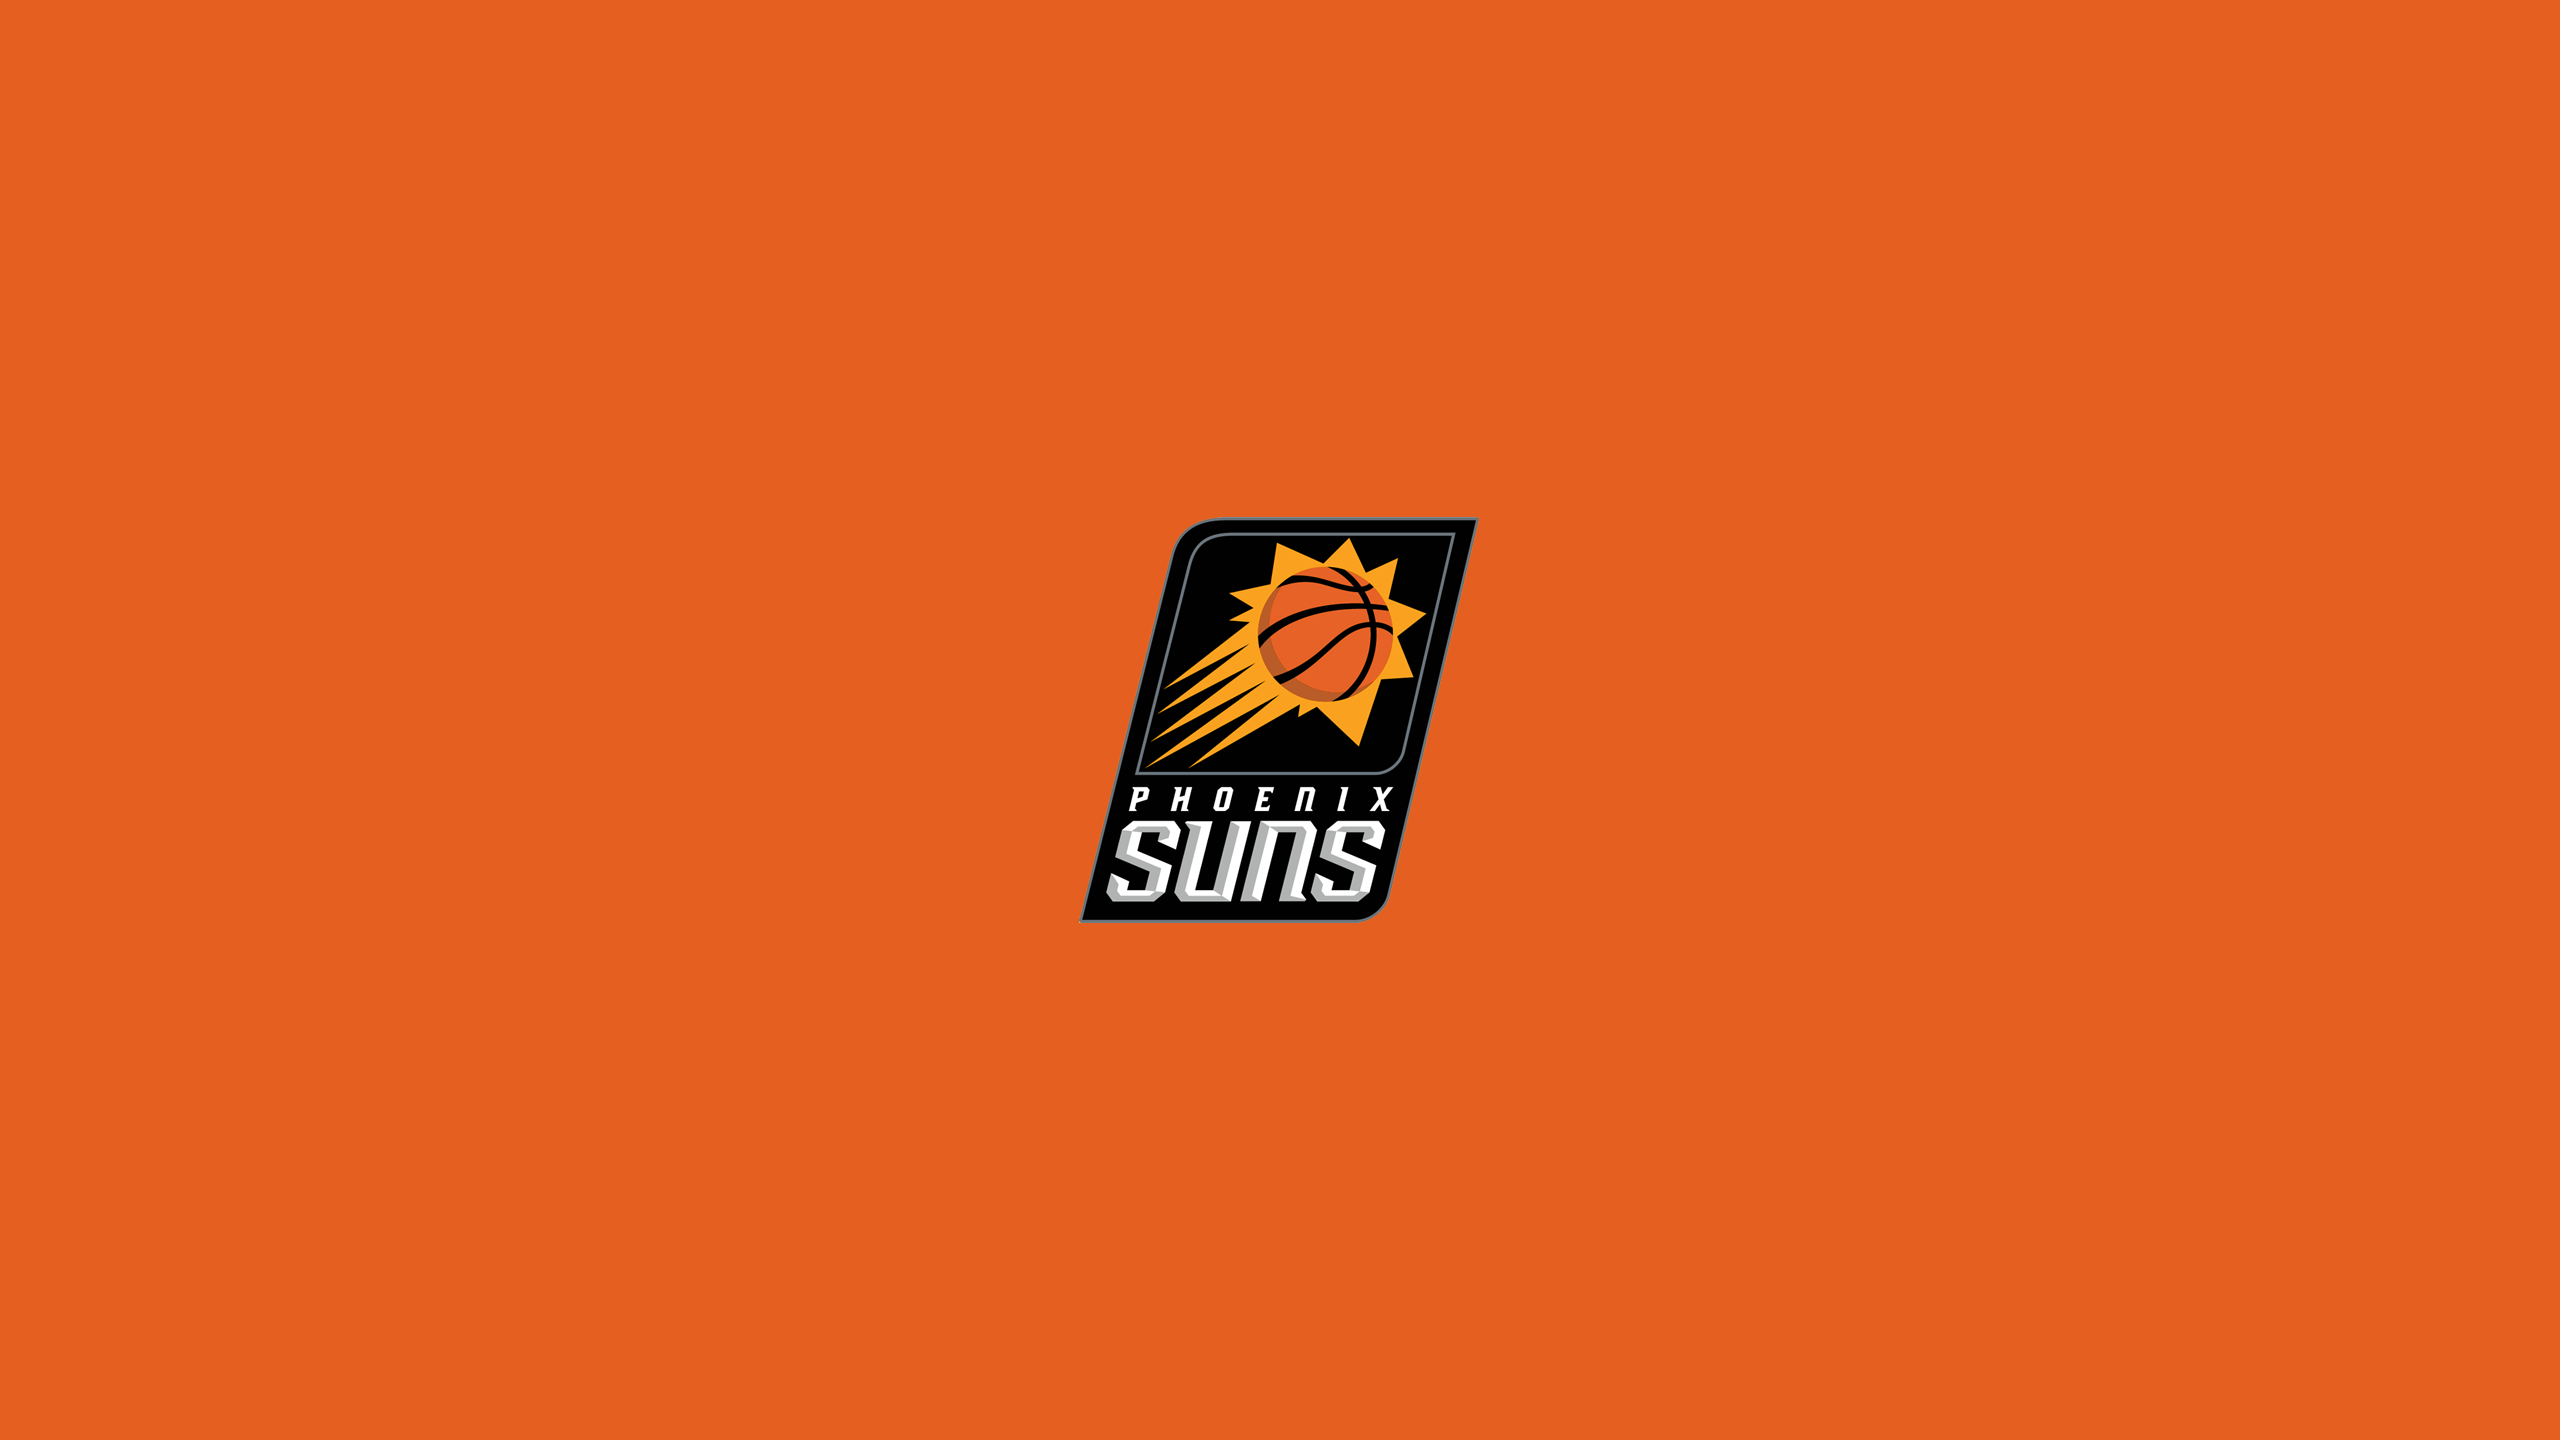 Phoenix Suns - Square Bettor